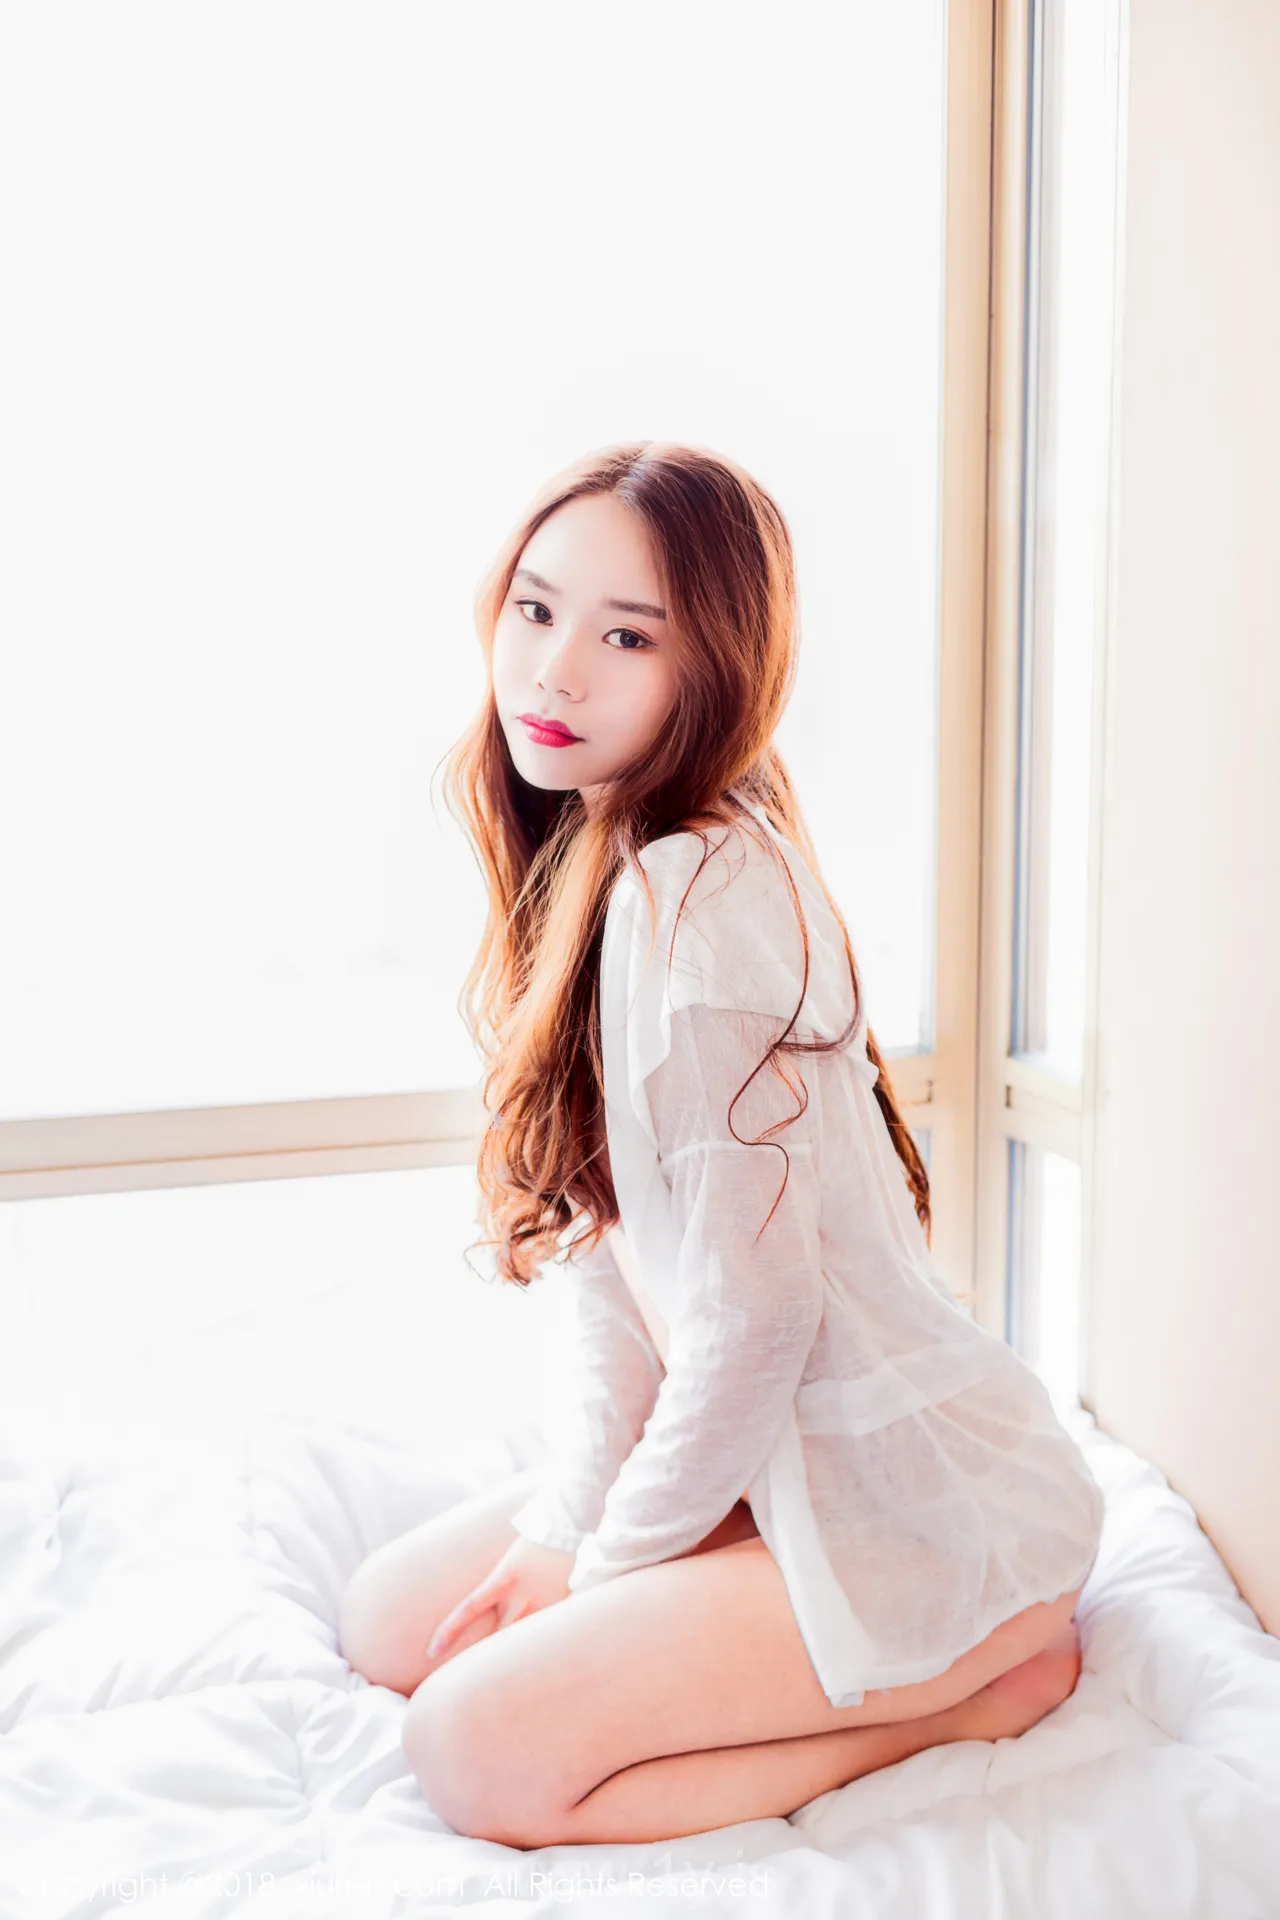 XIUREN(秀人网) NO.972 Stylish & Adorable Asian Girl 小曼miki